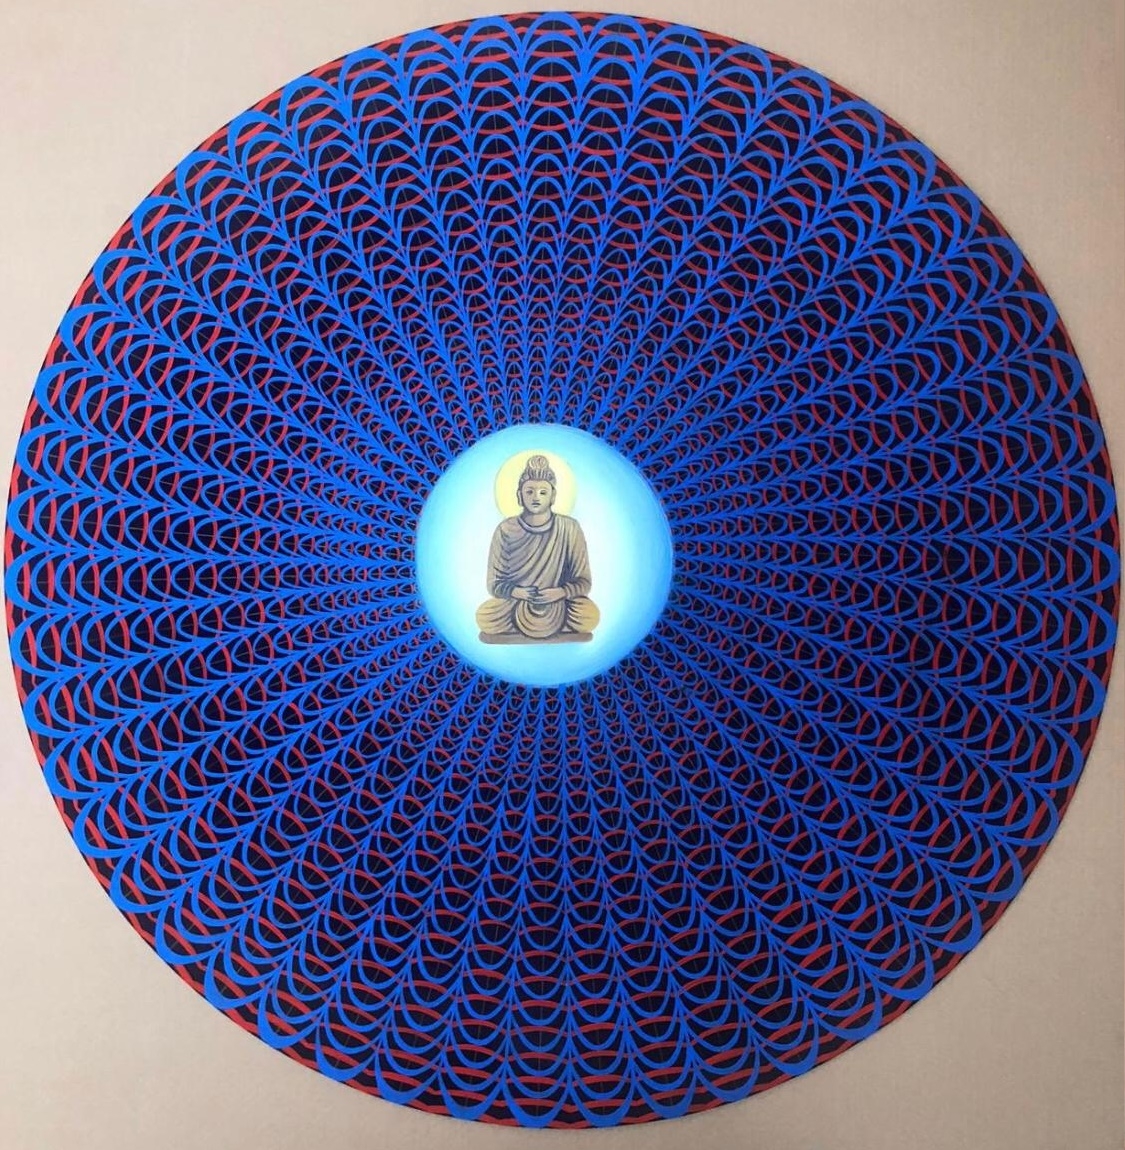 The Radiance of Buddha